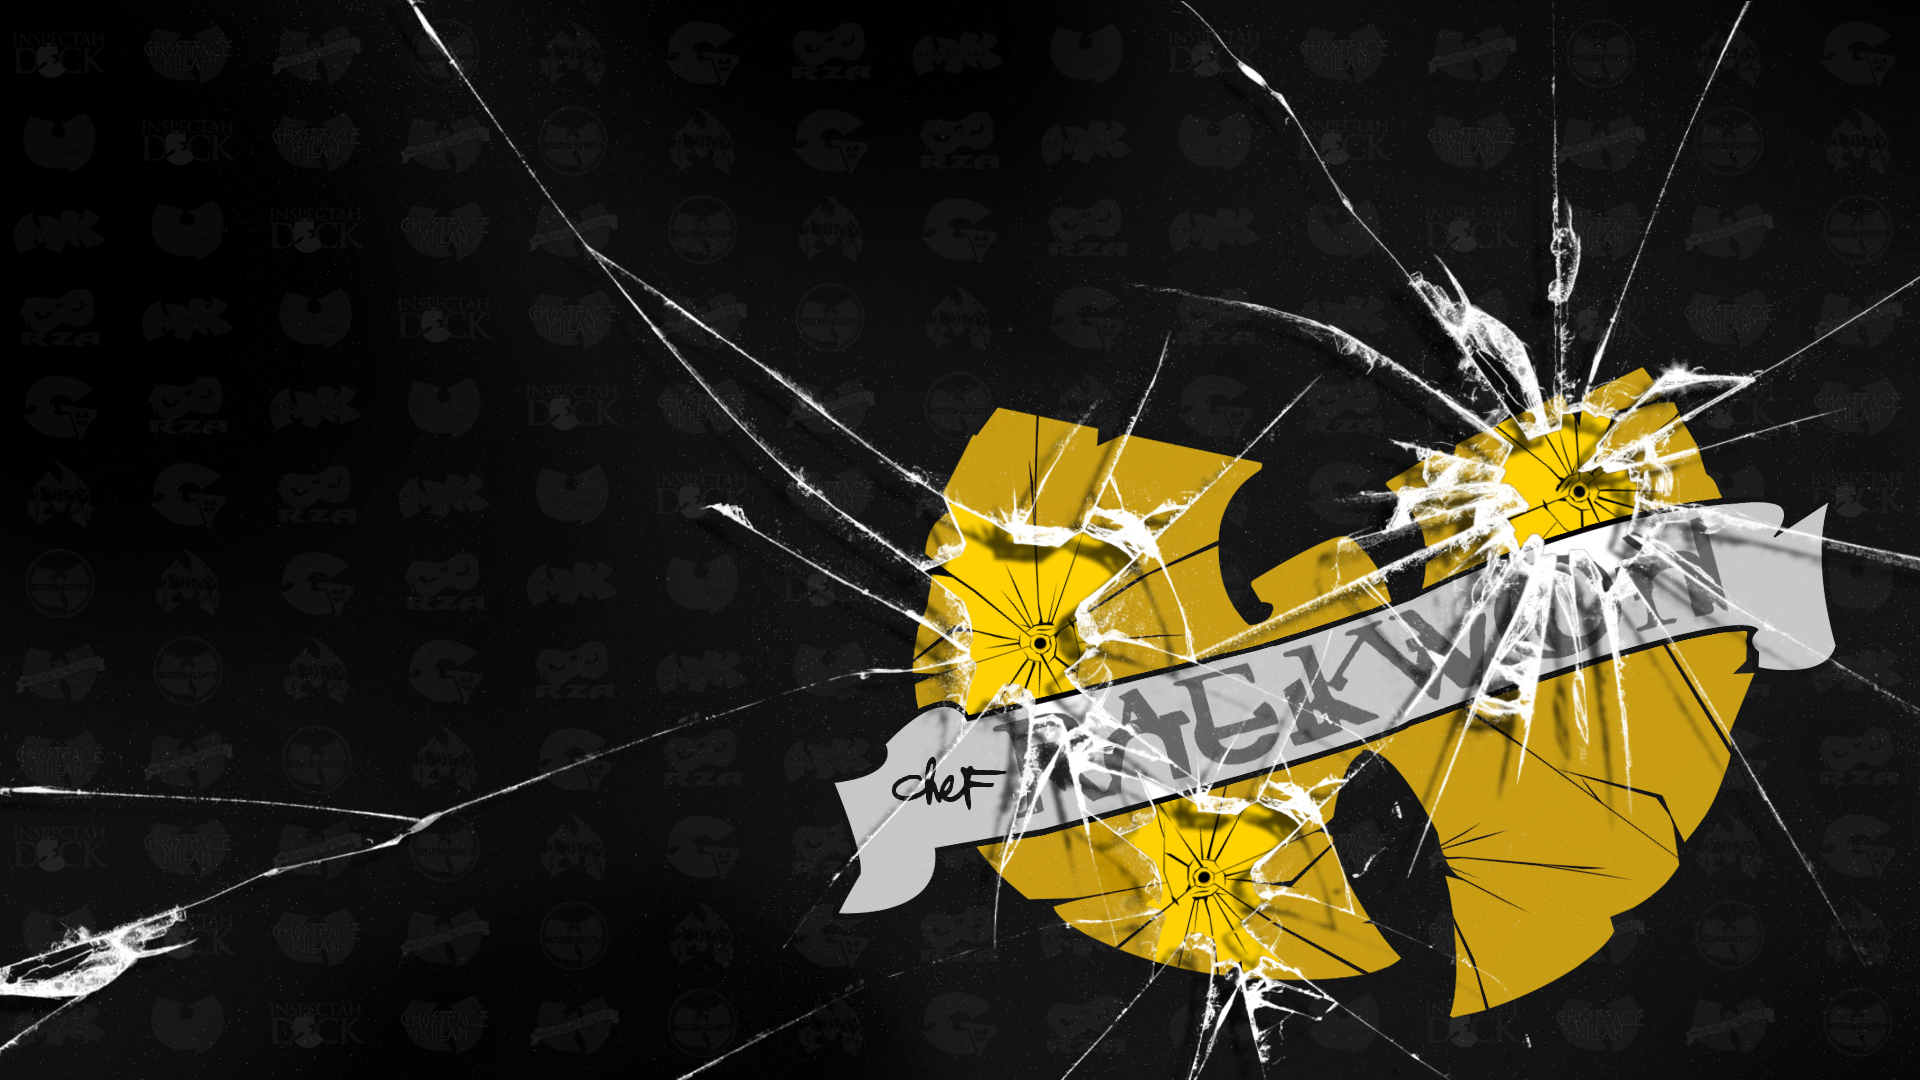 Wu Tang Clan Logos Raekwon The Chef by uLtRaMa6nEt1cART on DeviantArt